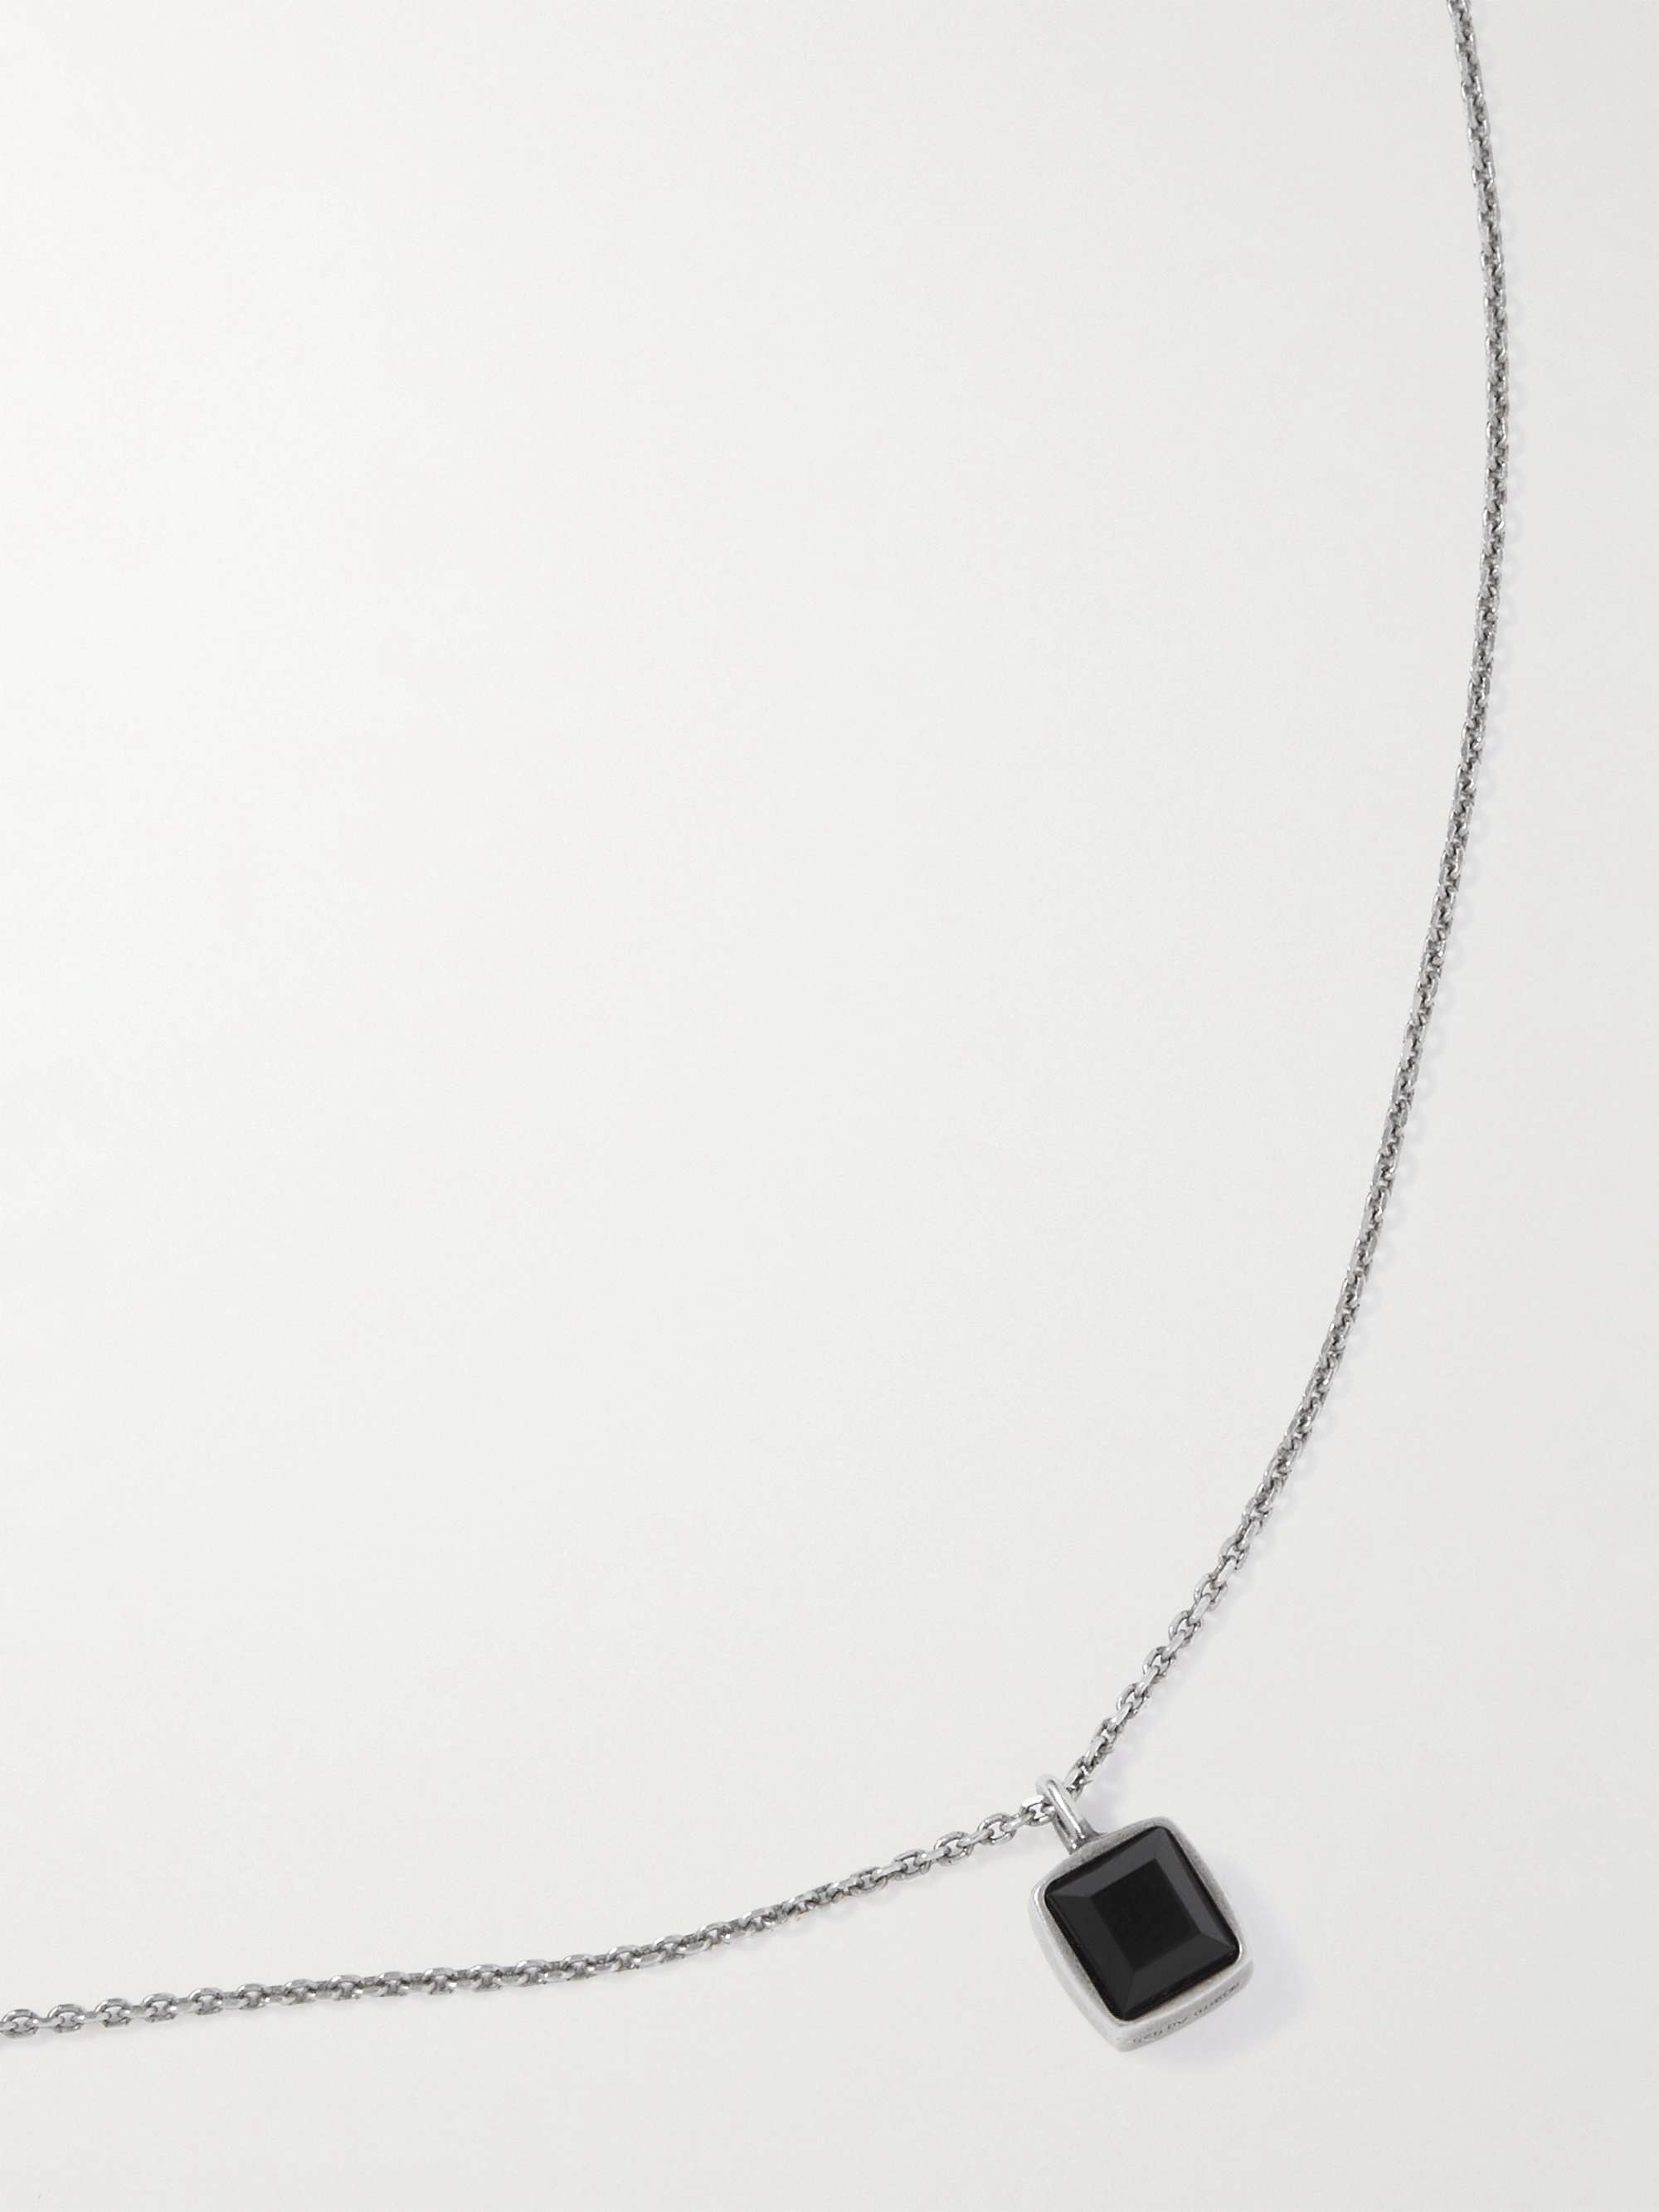 CELINE HOMME Rhodium-Plated Onyx Pendant Necklace